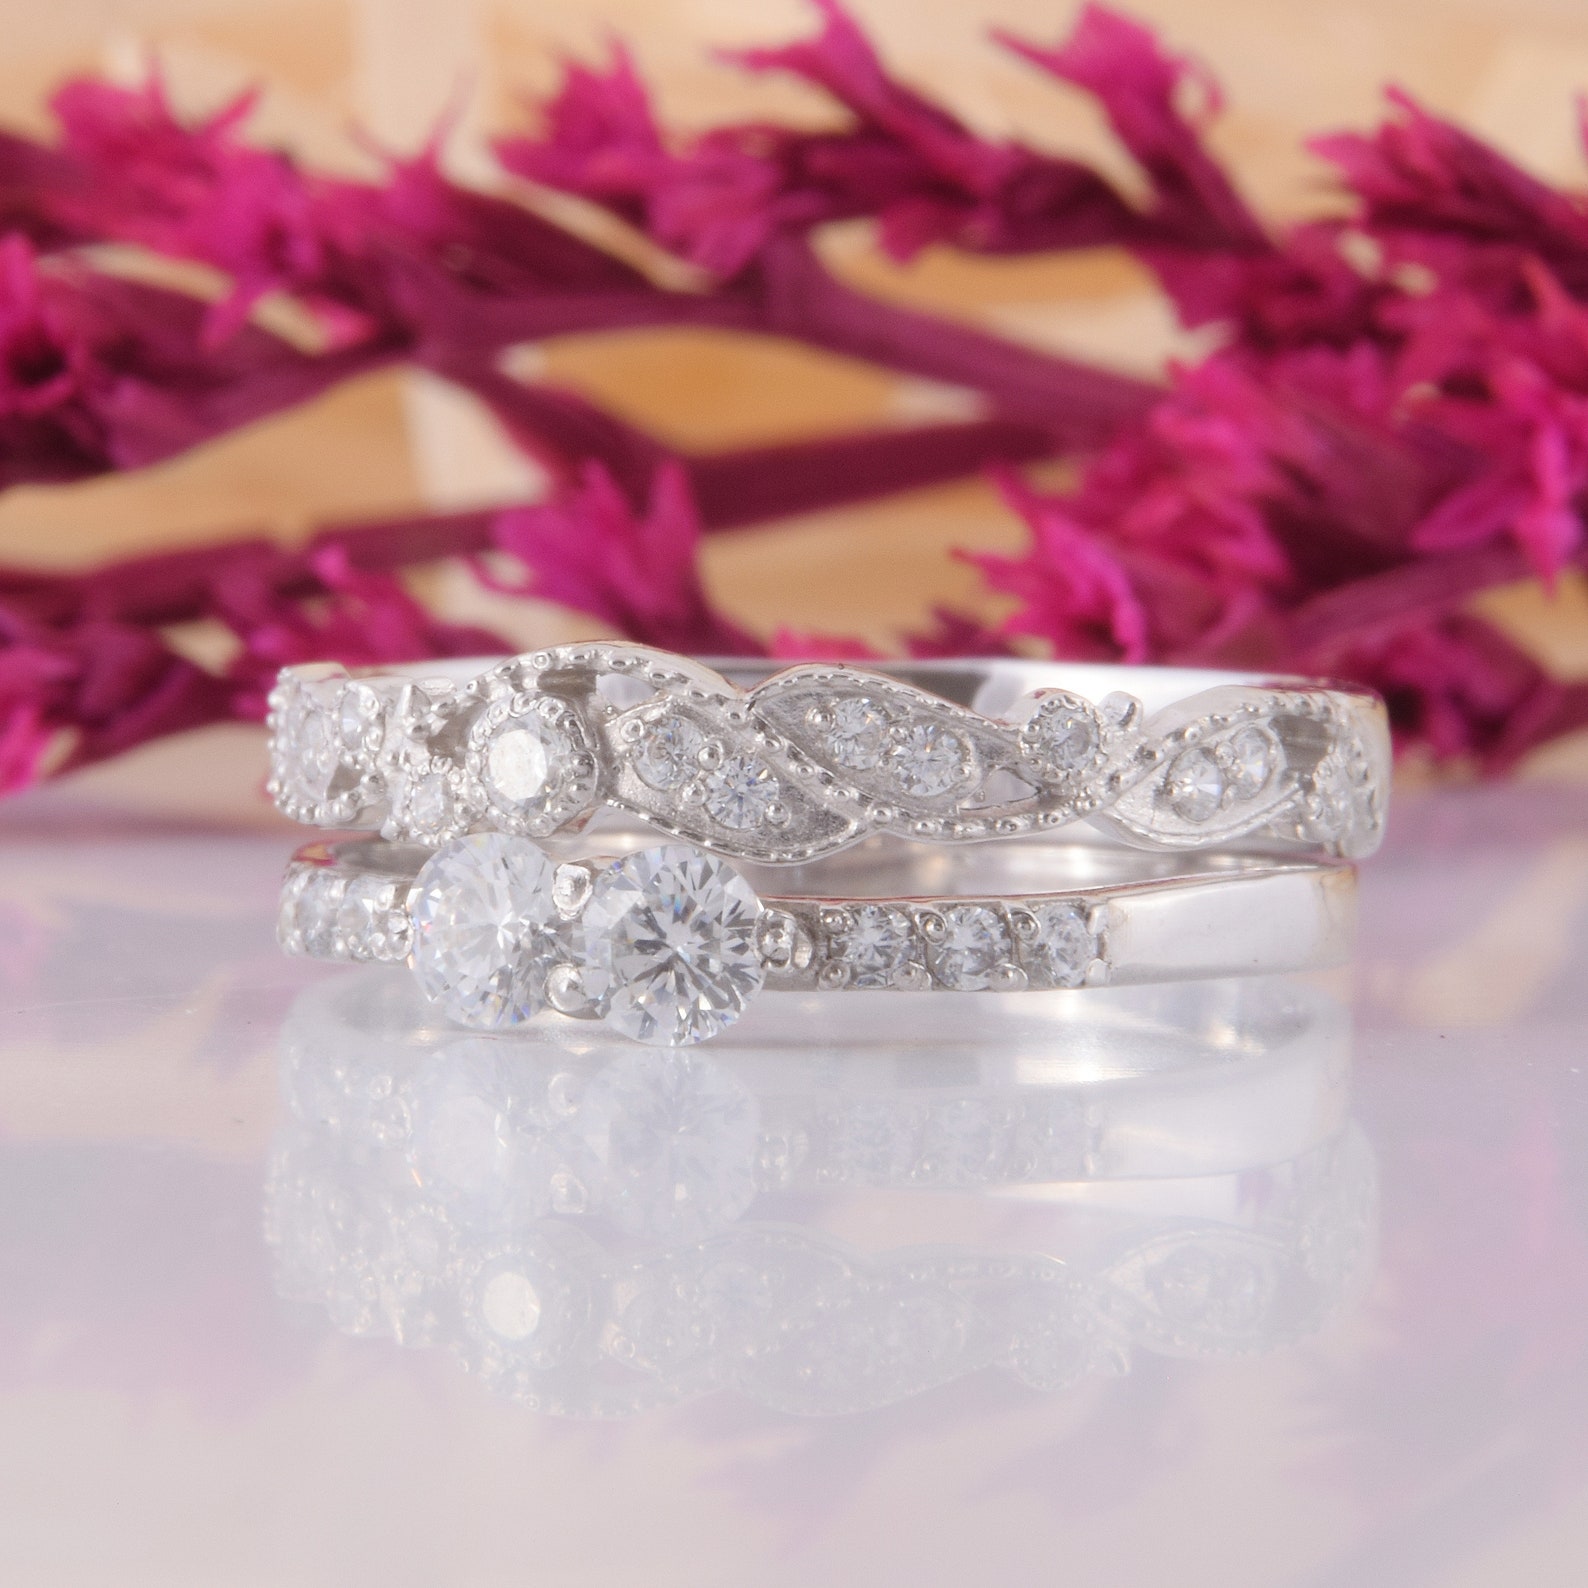 Unique Art Deco Womens Wedding Rings Set Small & Dainty | Etsy